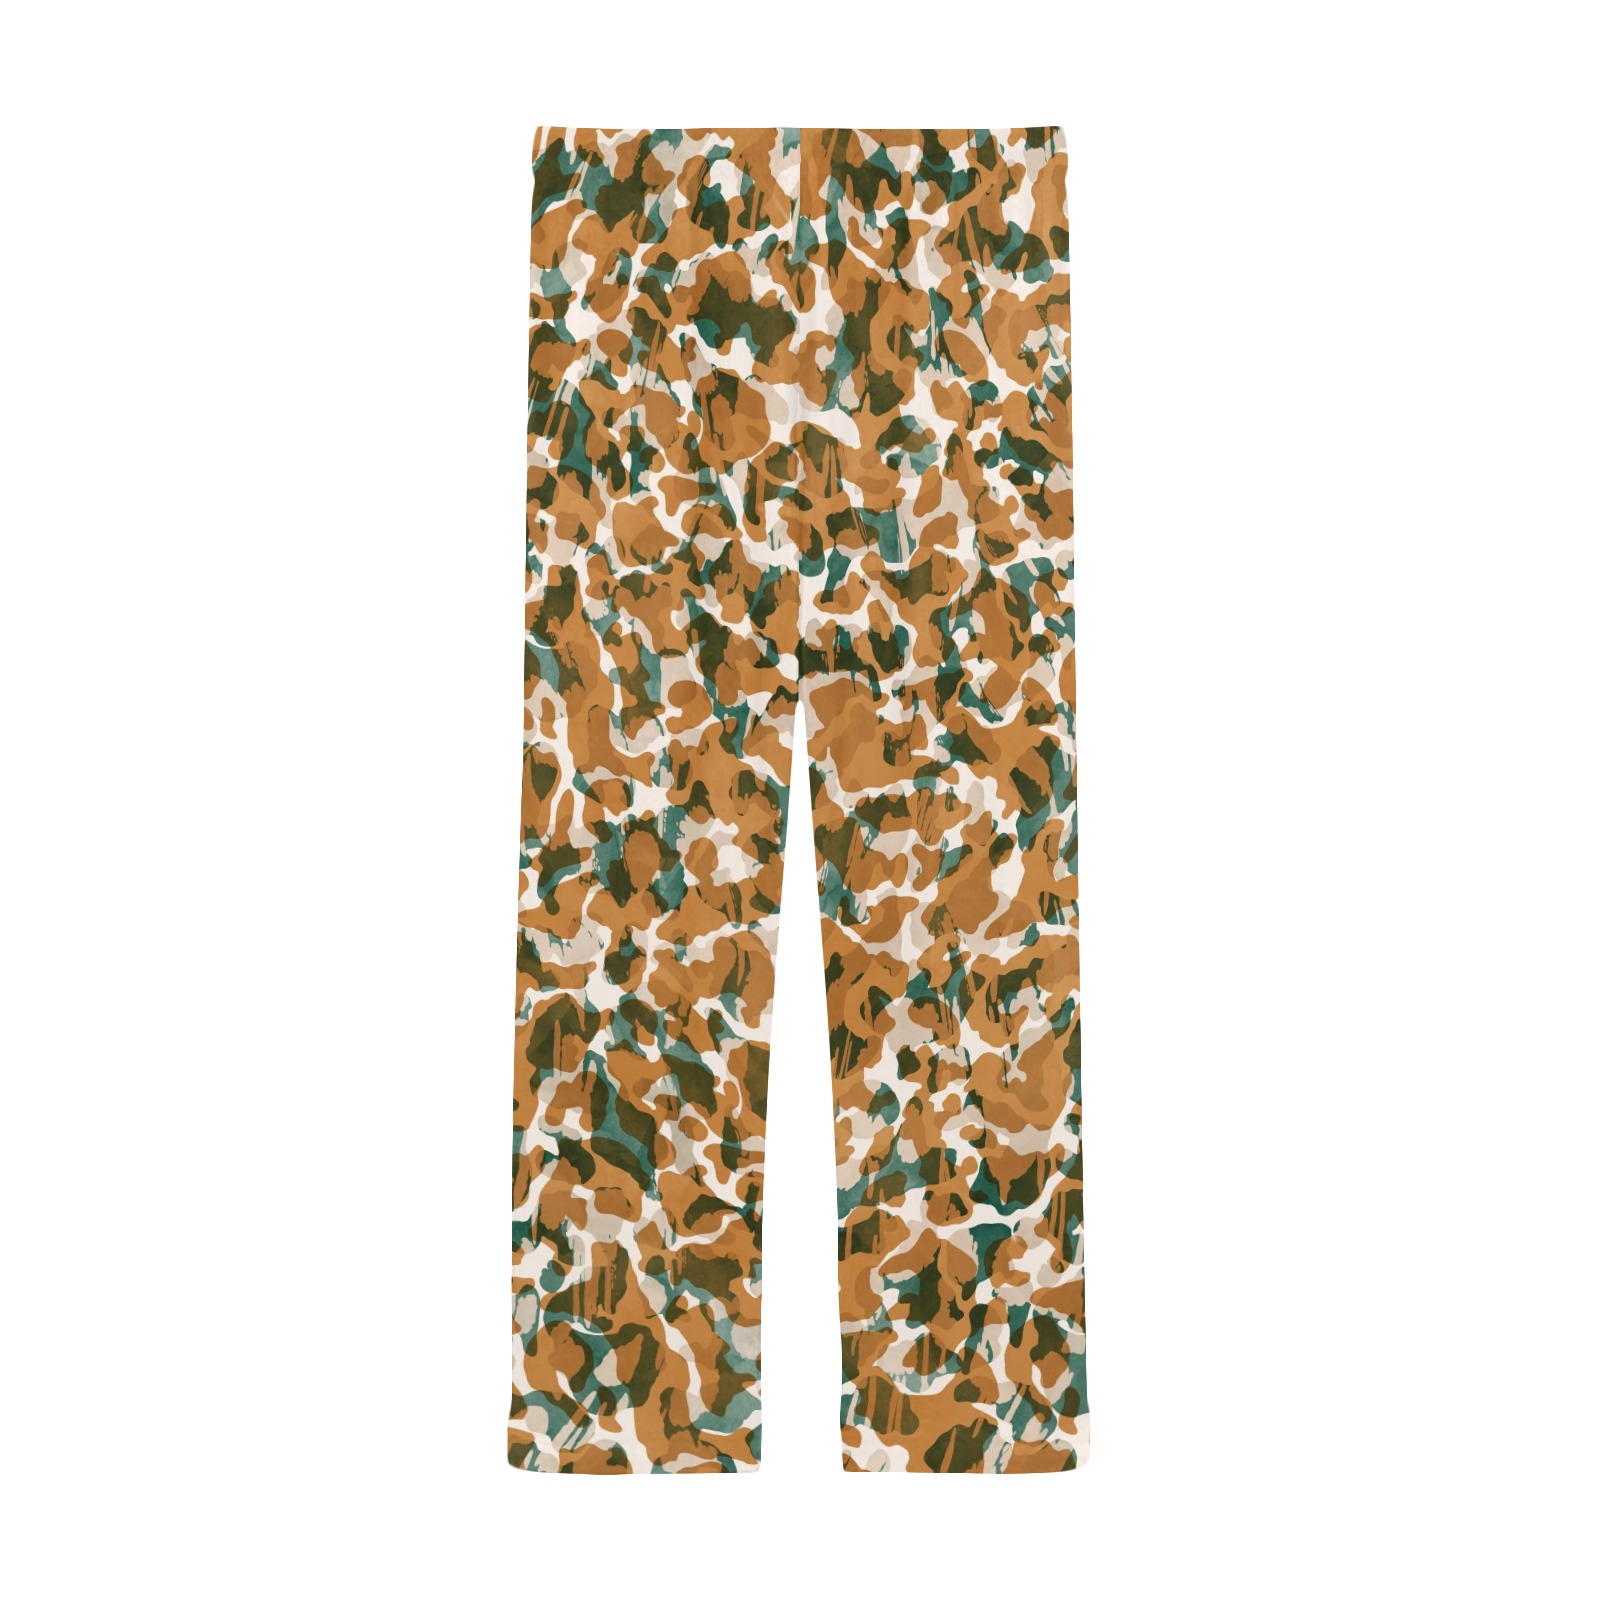 0040-Wild skin animal-58S Men's Pajama Trousers